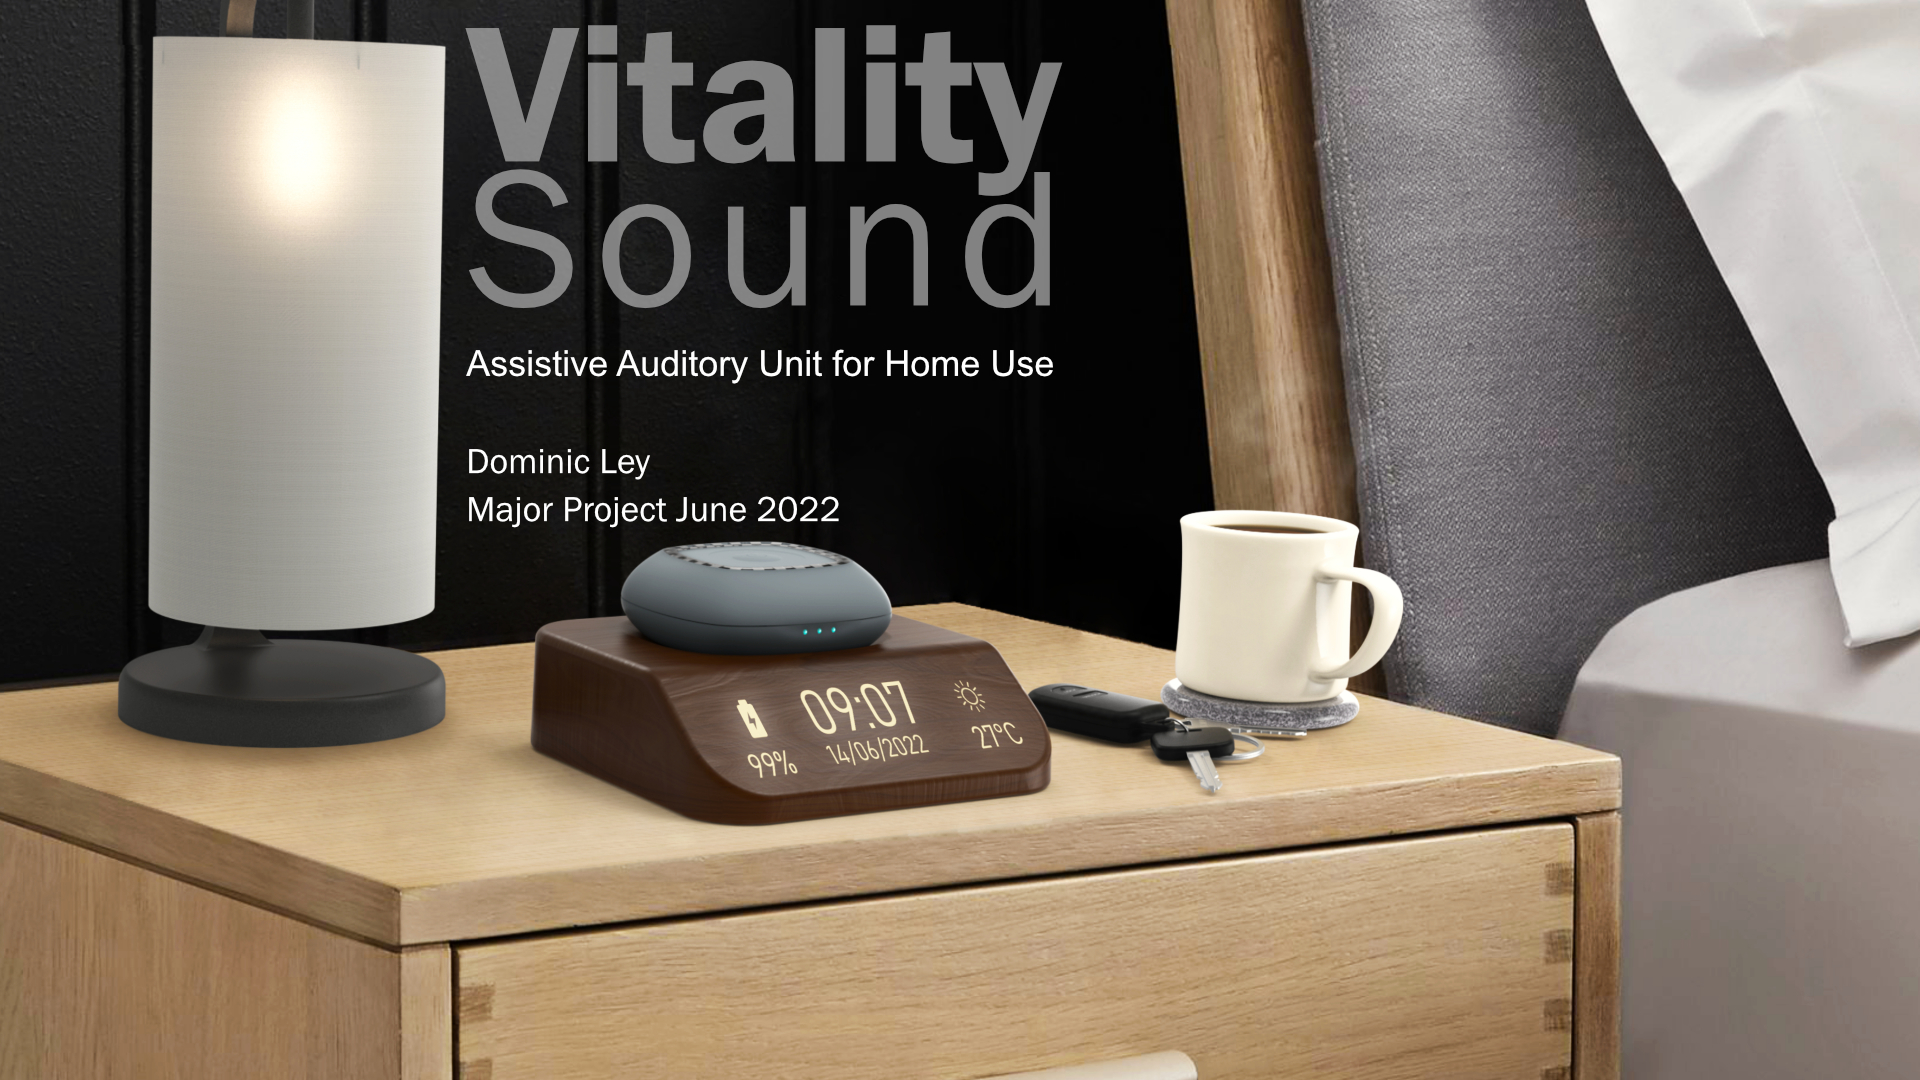 Home bedside auditory unit